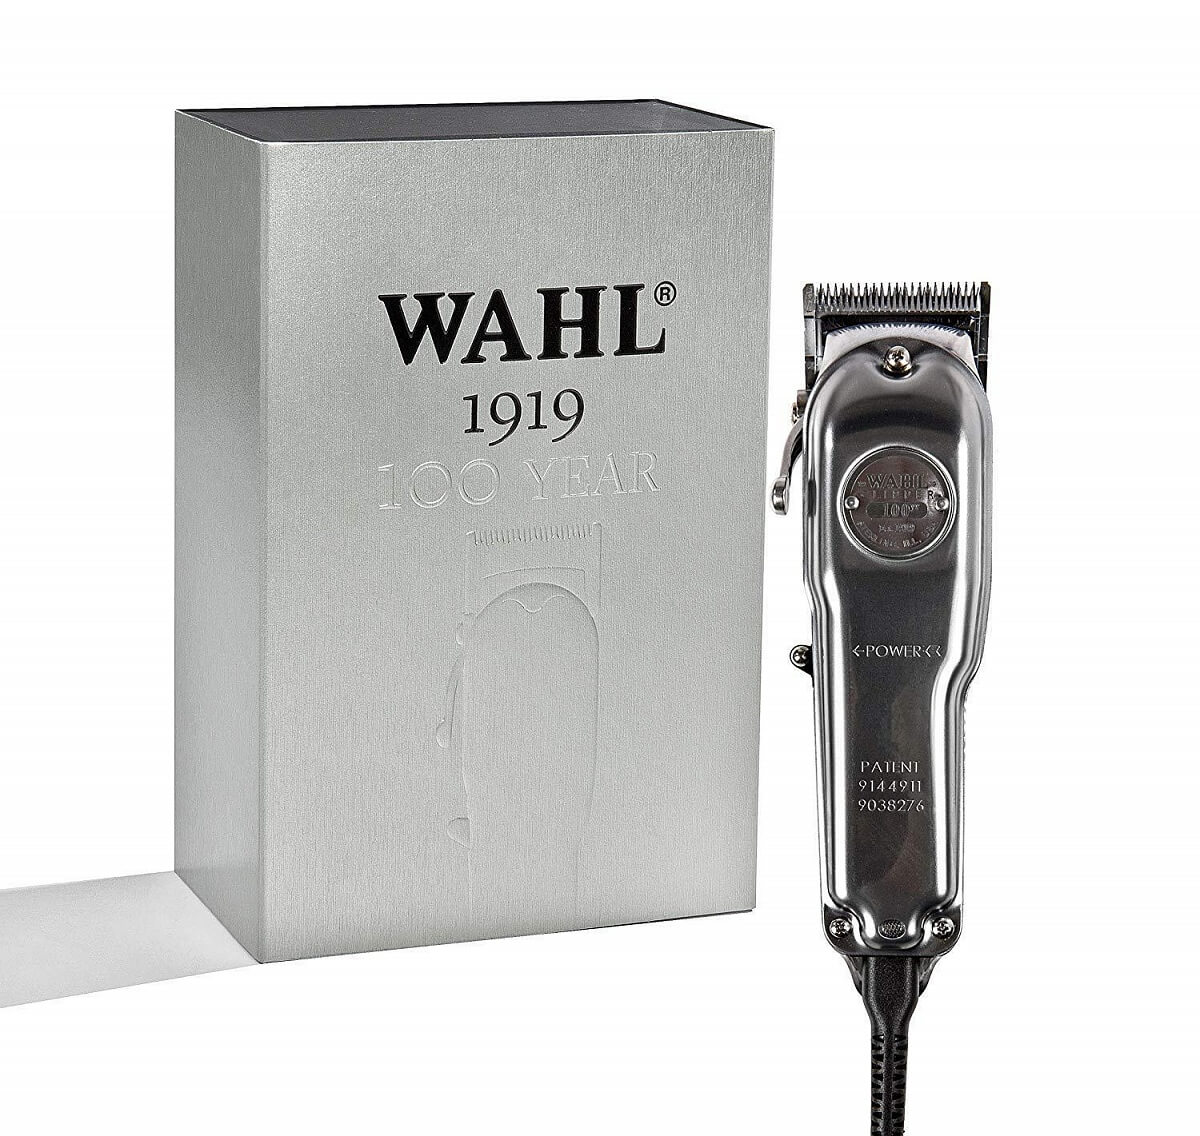 Машинка барбера Wahl 100 Year Anniversary 81919 для стрижки волос